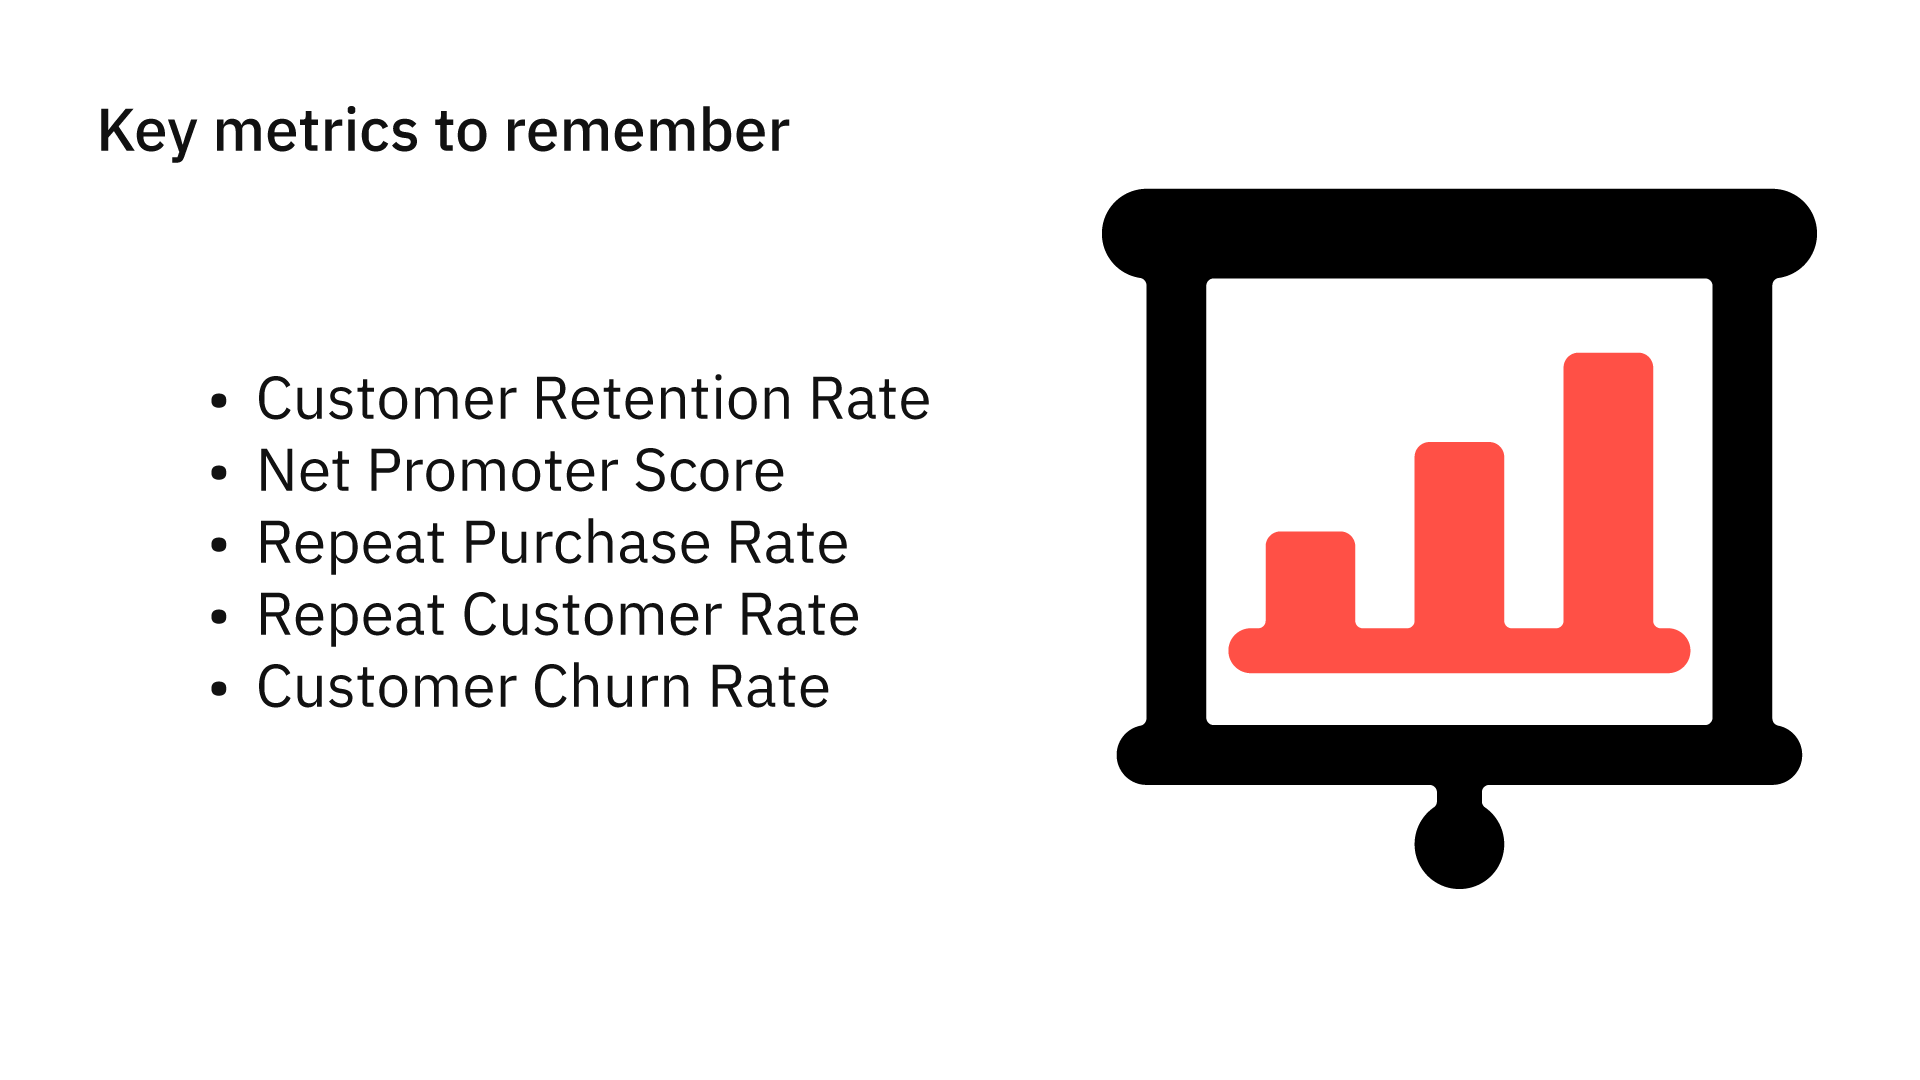 Key metrics for customer retention.